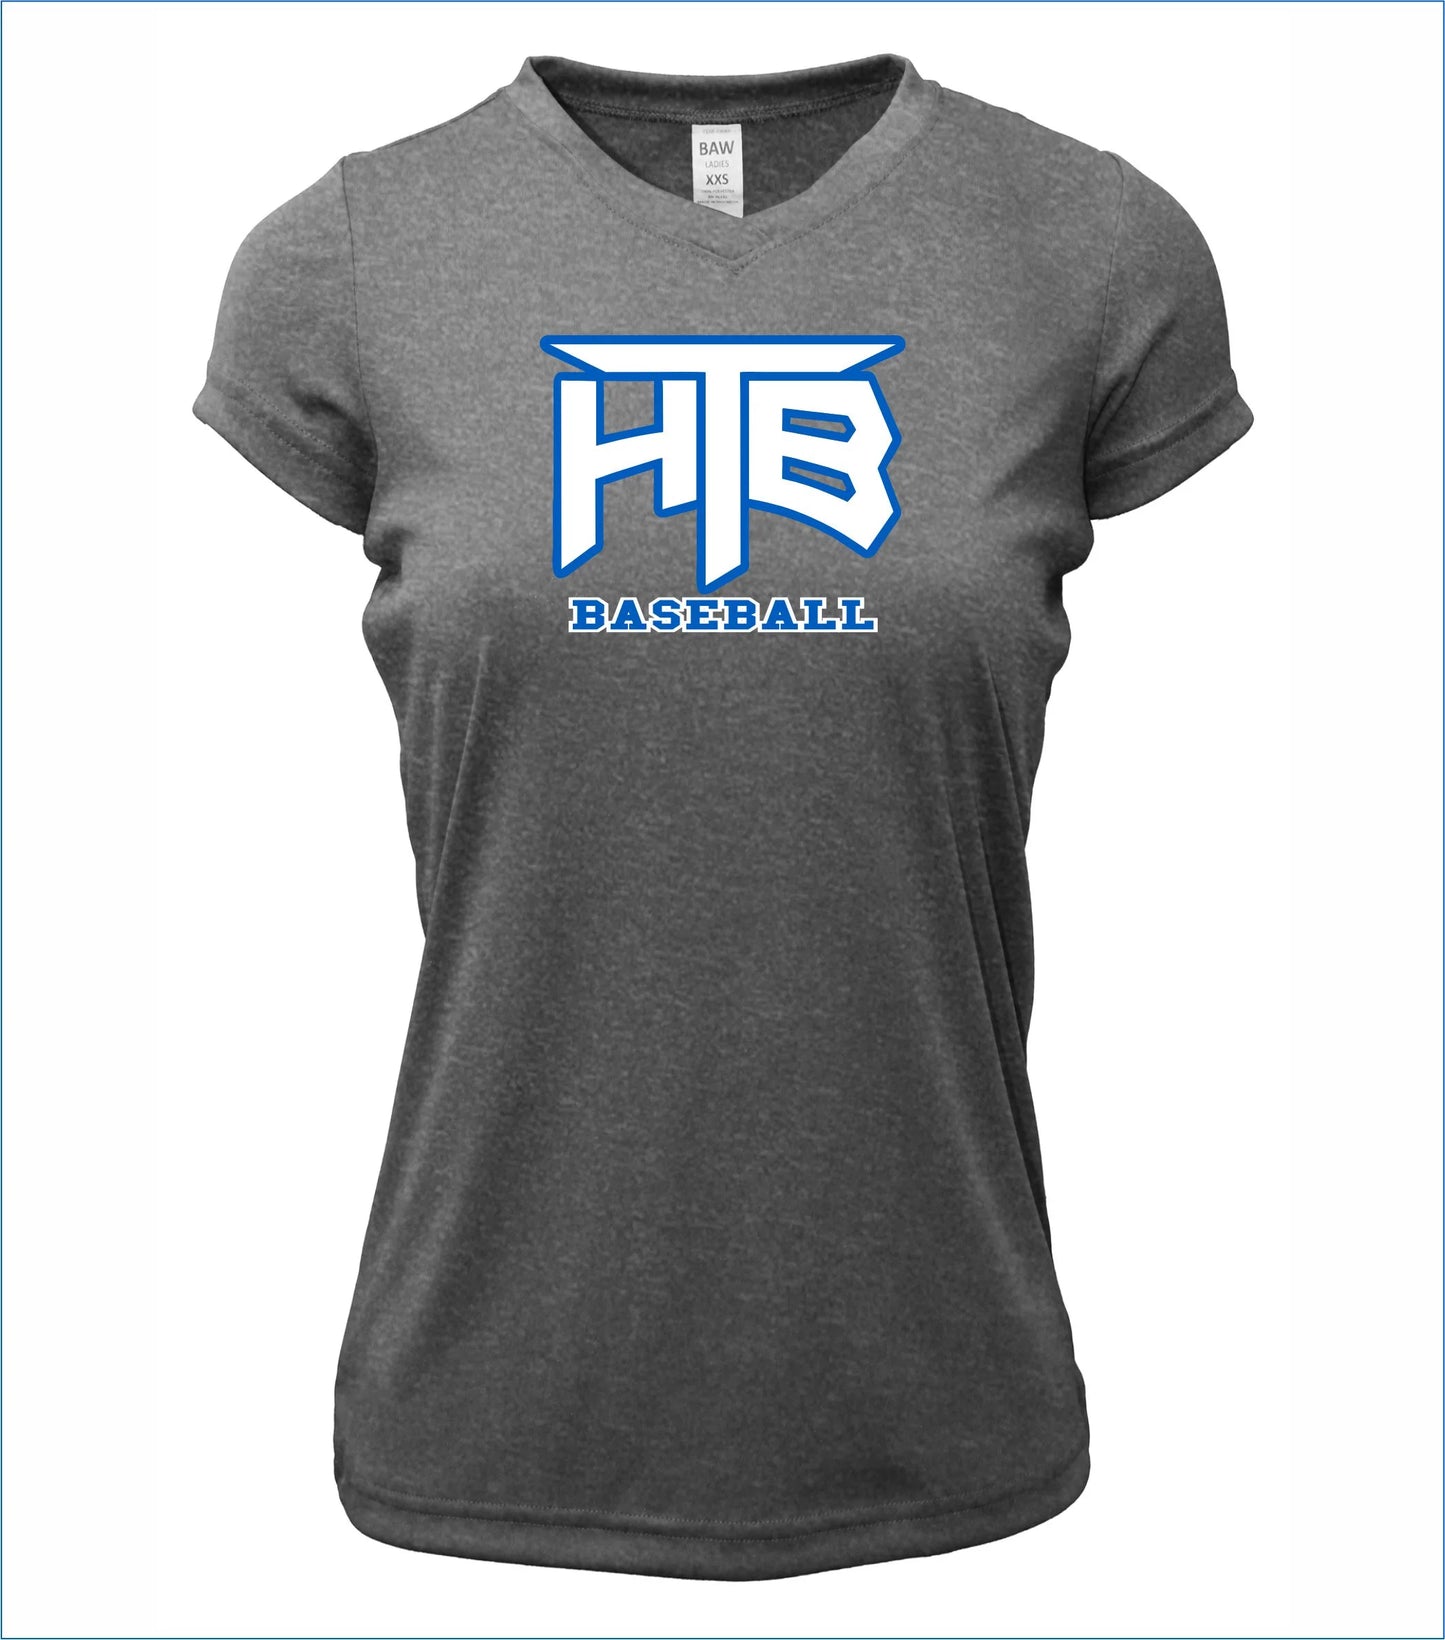 HTB Baseball Ladies Short Sleeve V-Neck Cotton T-Shirt